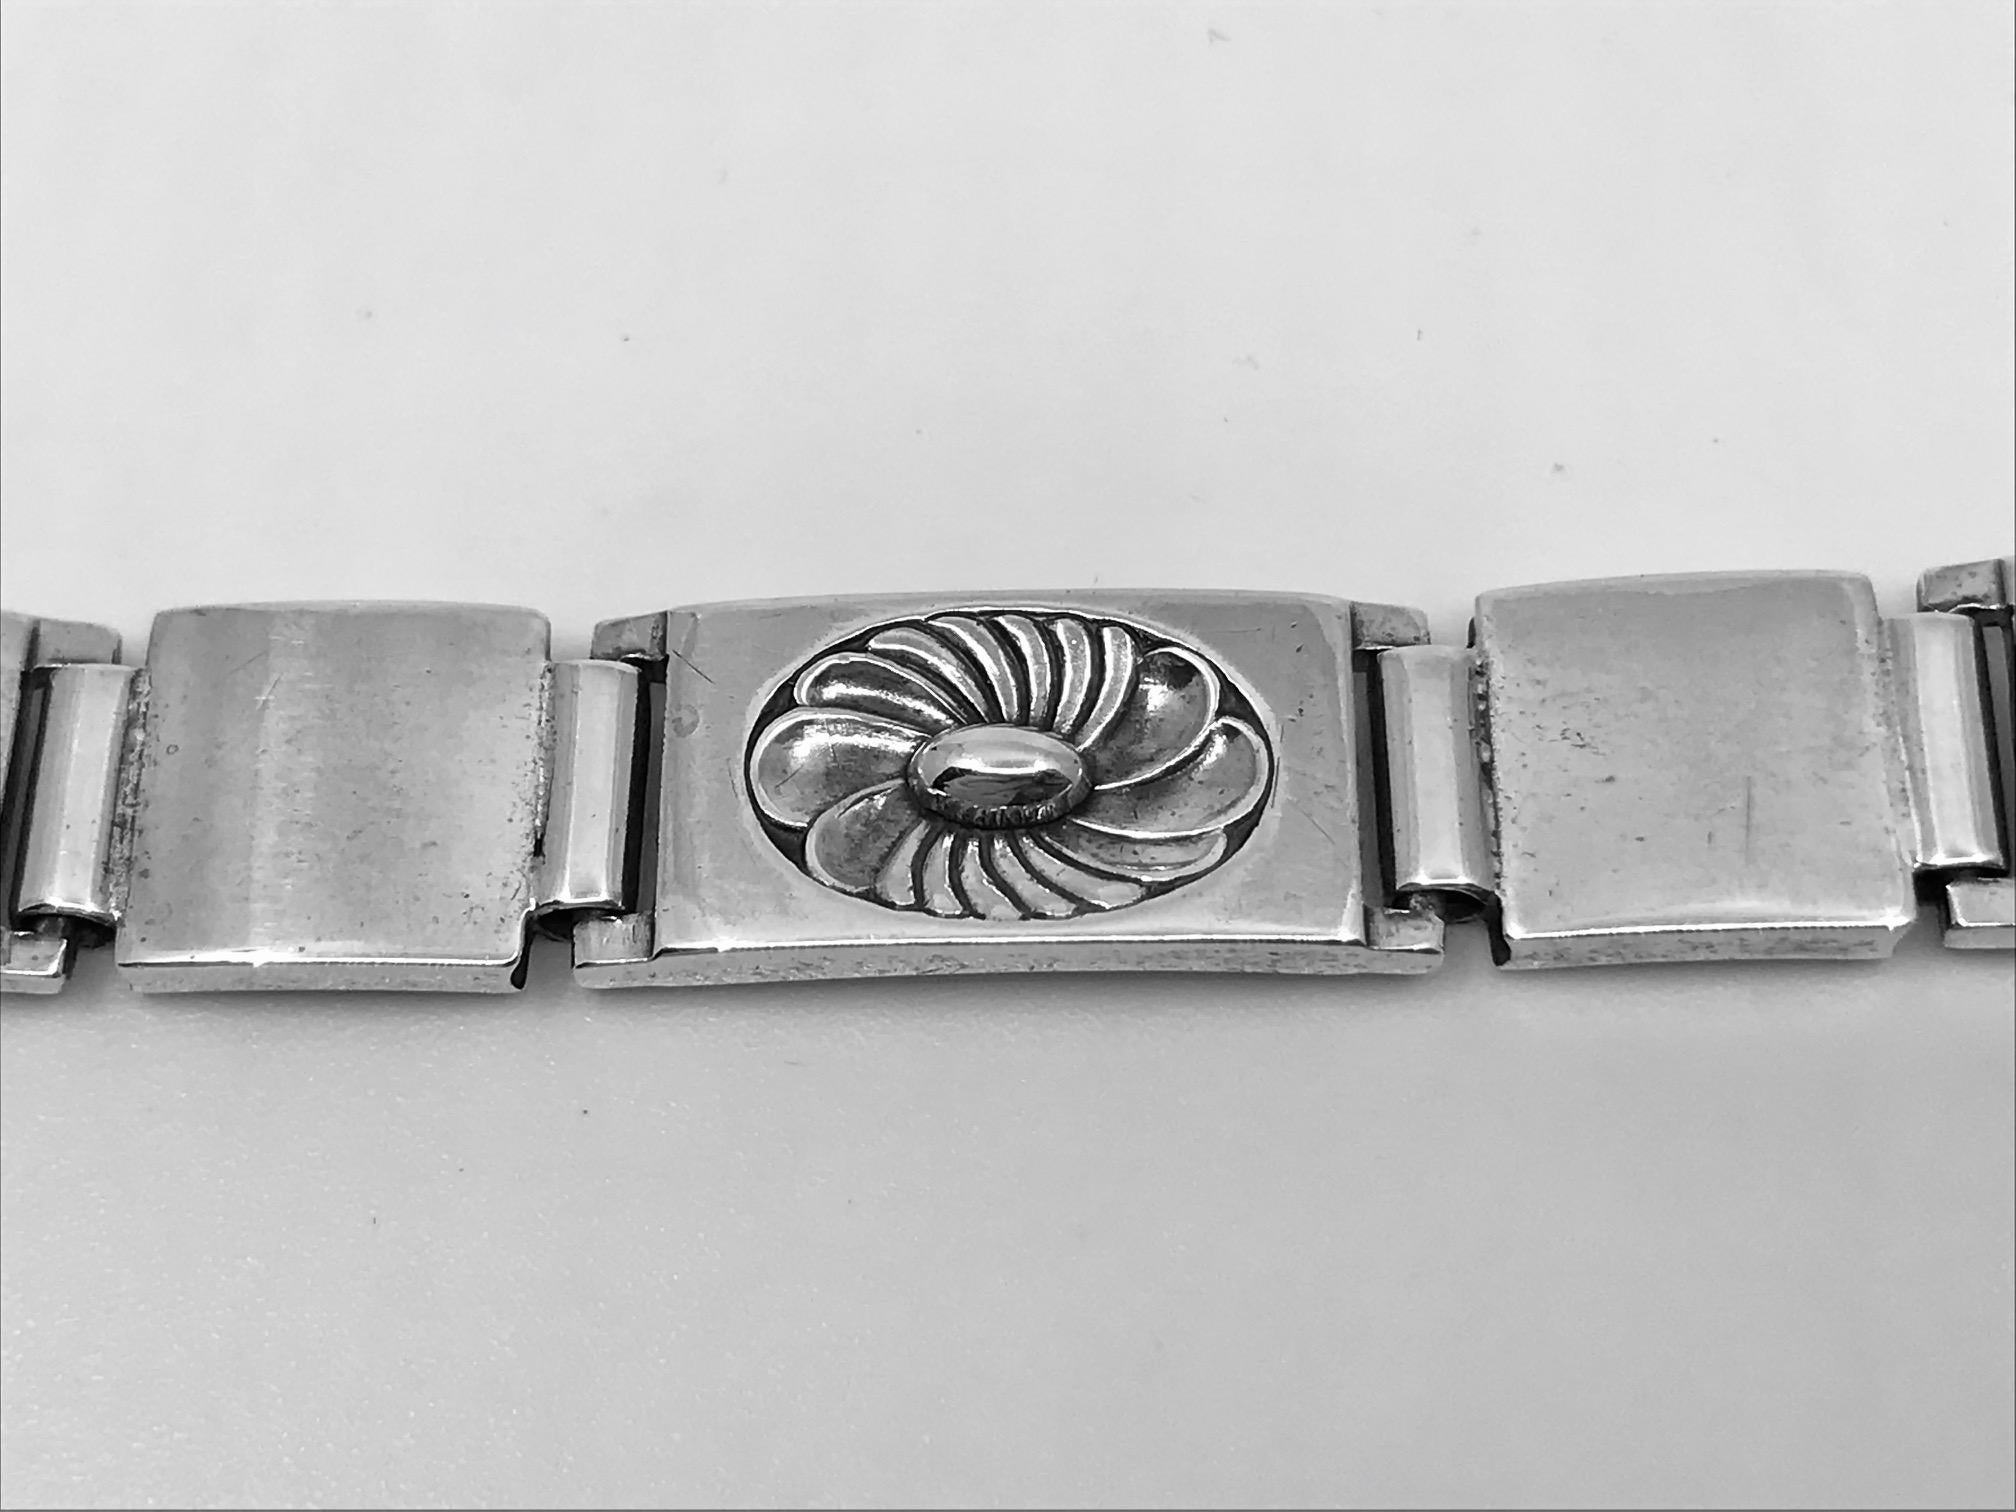 Sterling silver Georg Jensen Art Deco bracelet, design #56B by Henry Pilstrup from circa 1930.
Measures 7 1/4″ in length, the links are 3/8″ across (18.5cm, 0.9cm).
Post 1944 Georg Jensen hallmark.